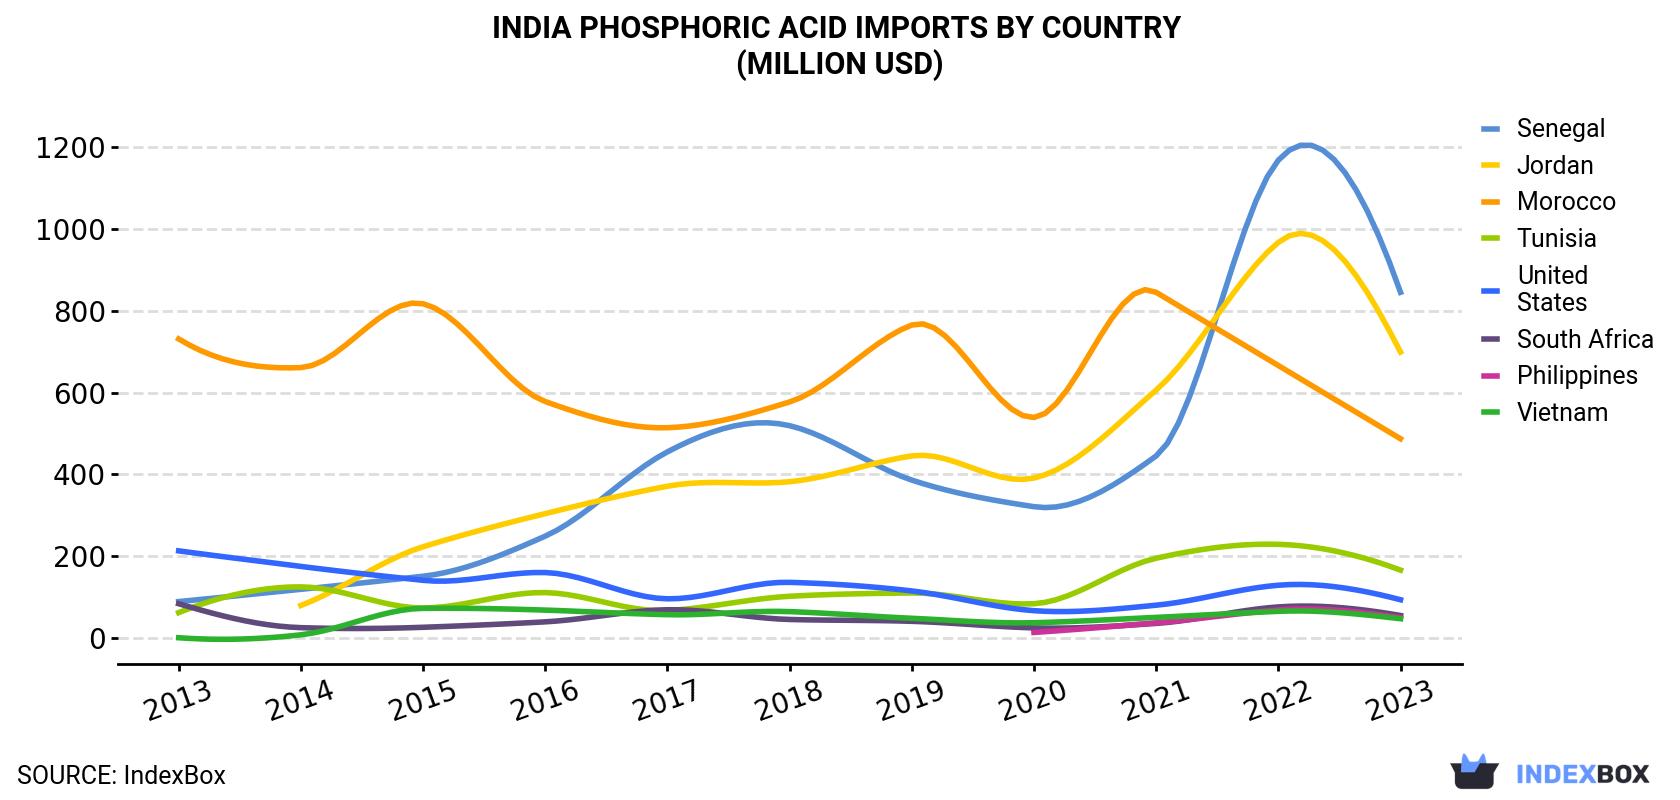 India Phosphoric Acid Imports By Country (Million USD)